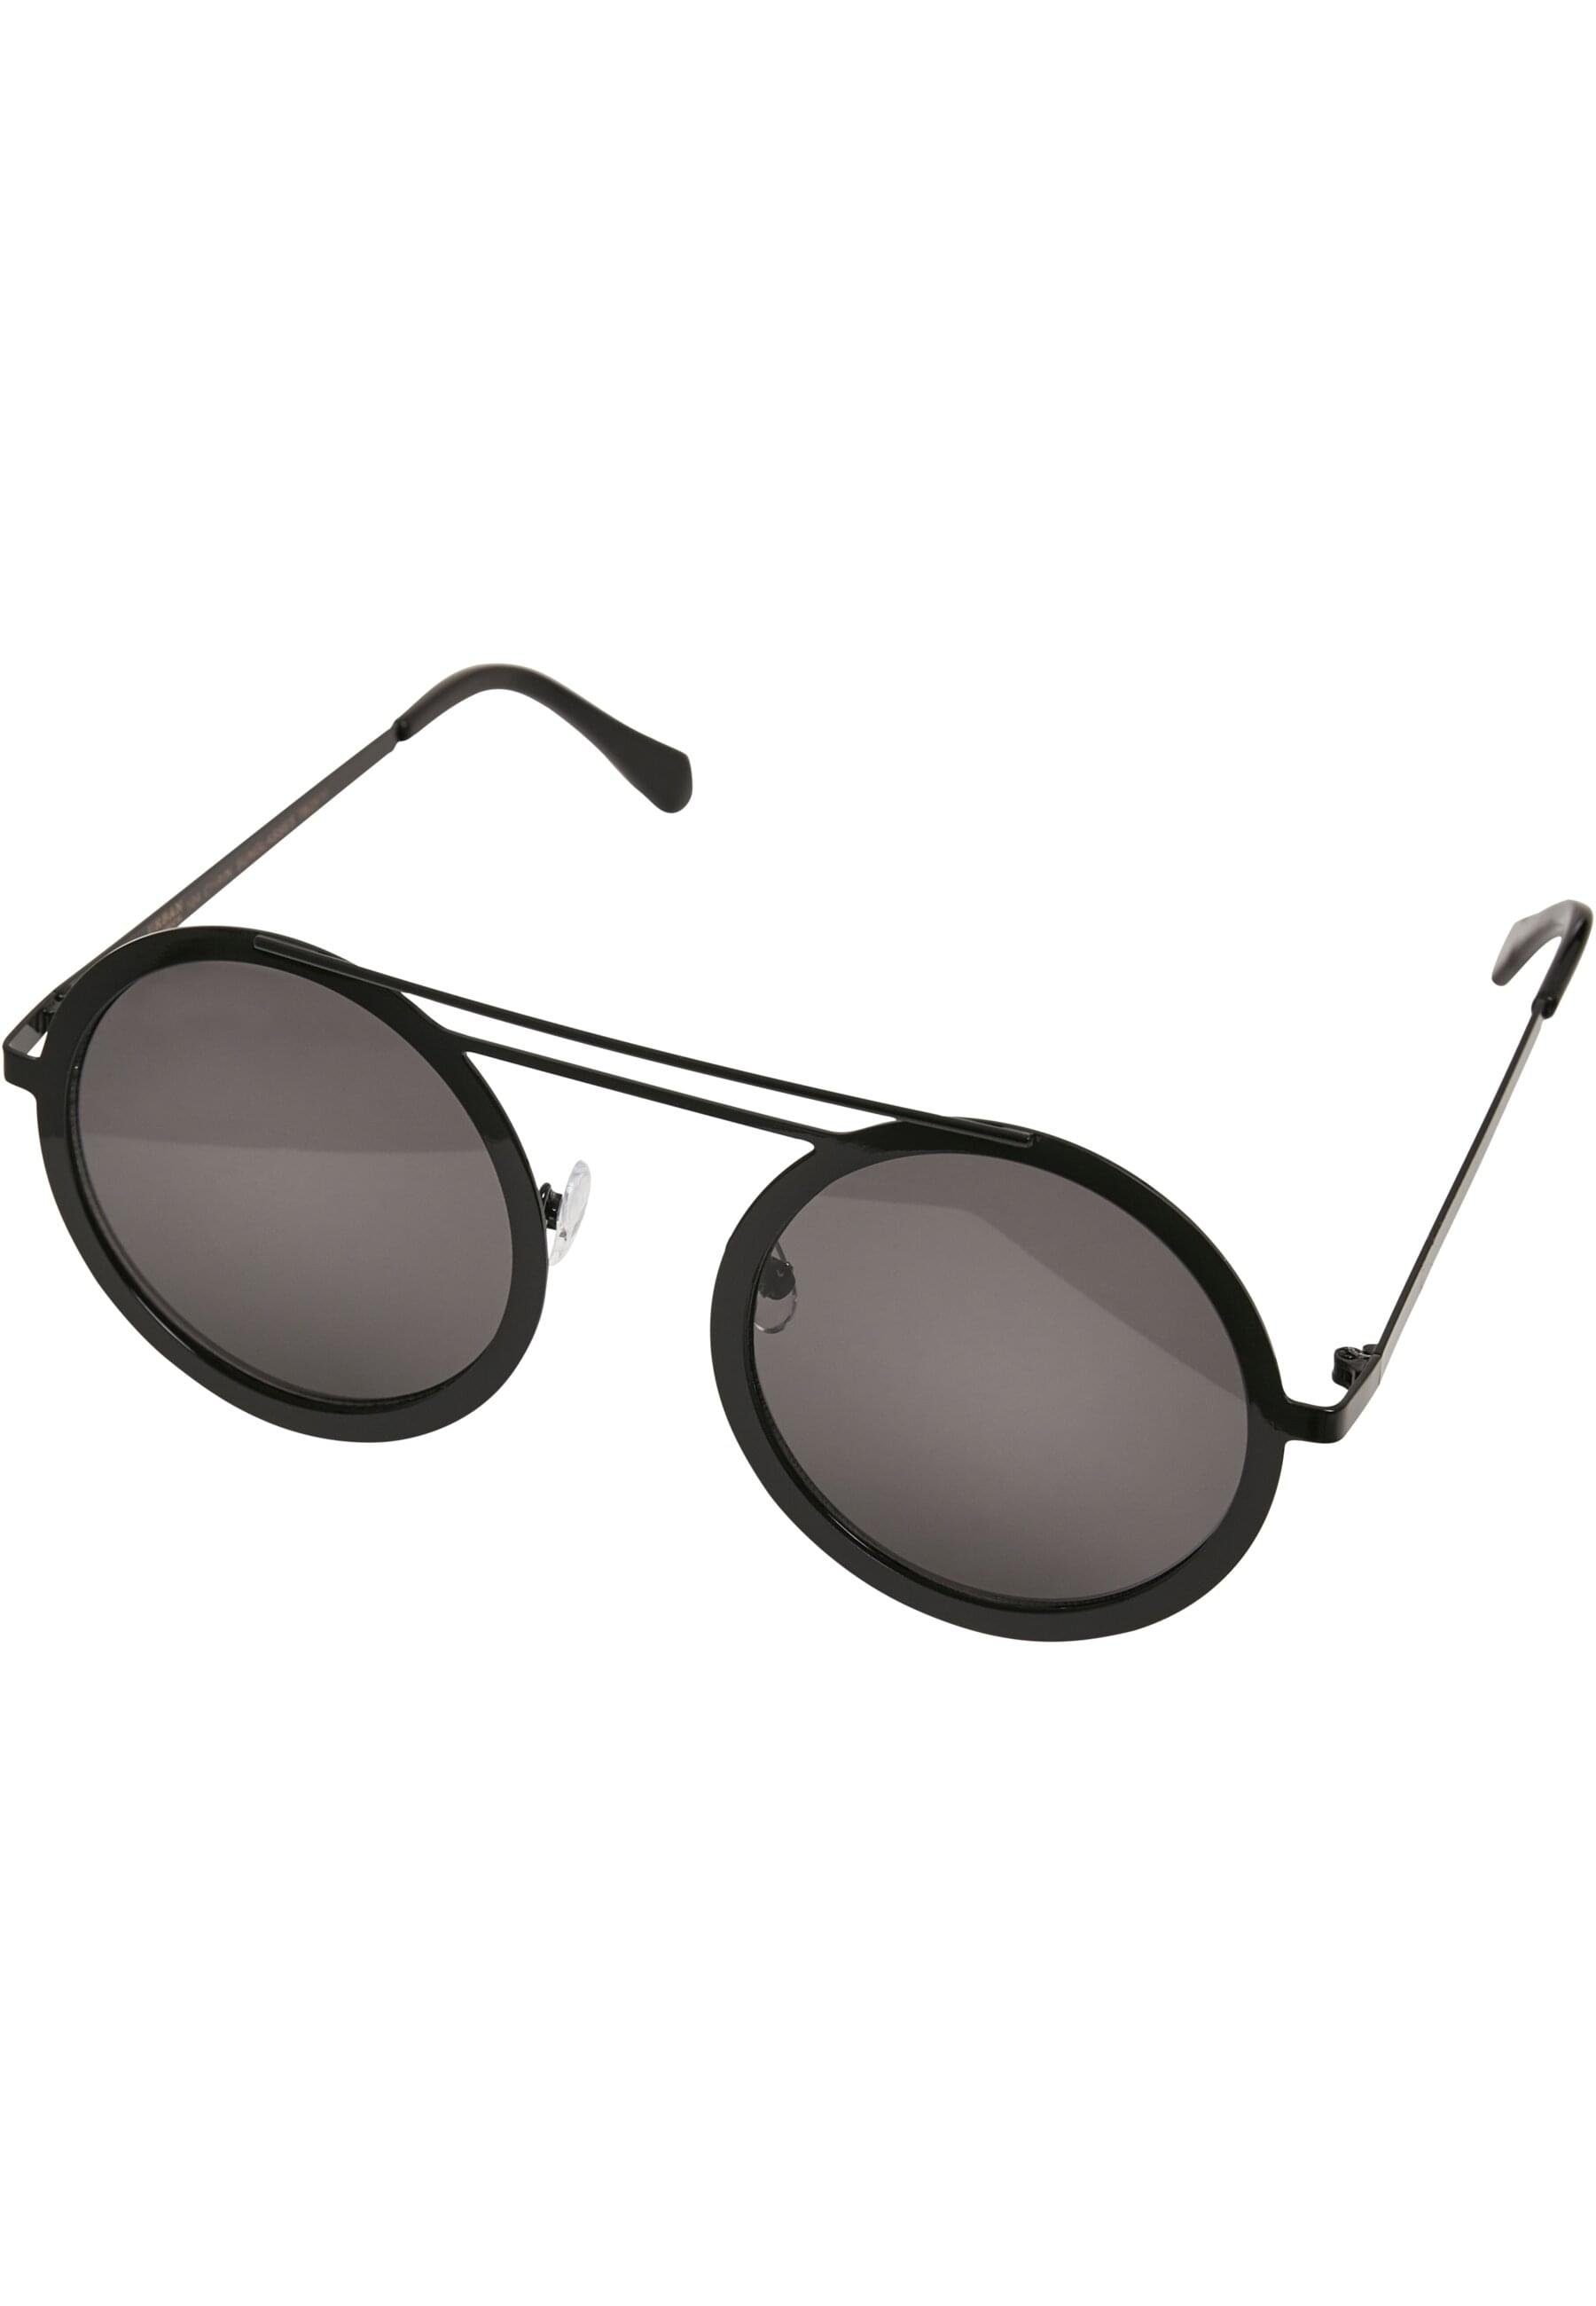 Sunglasses Unisex CLASSICS Sonnenbrille URBAN 104 Chain black/black